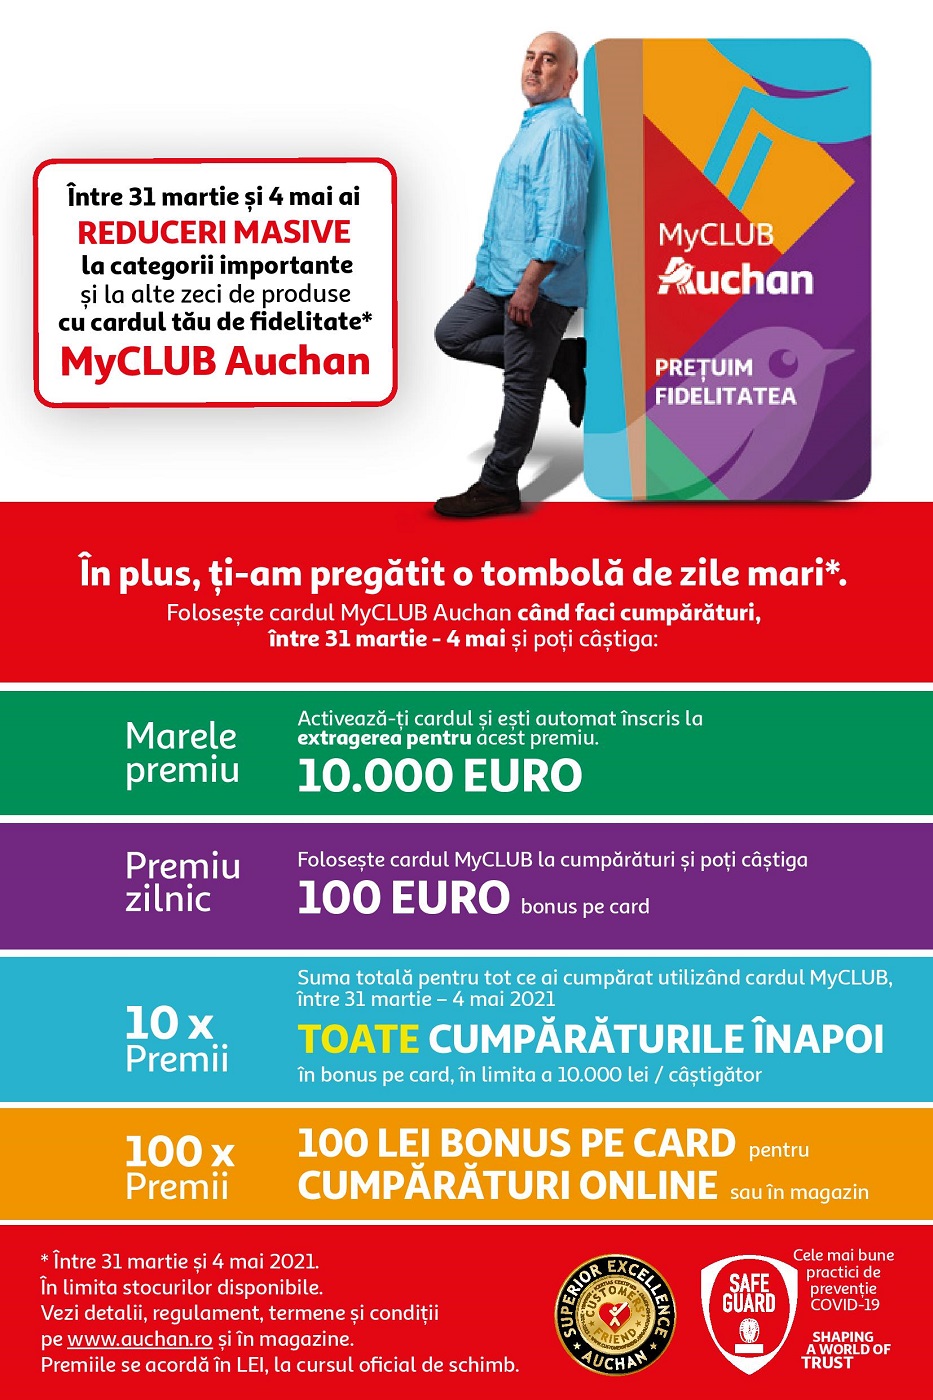 Auchan Romania lanseaza programul de fidelitate MyCLUB Auchan